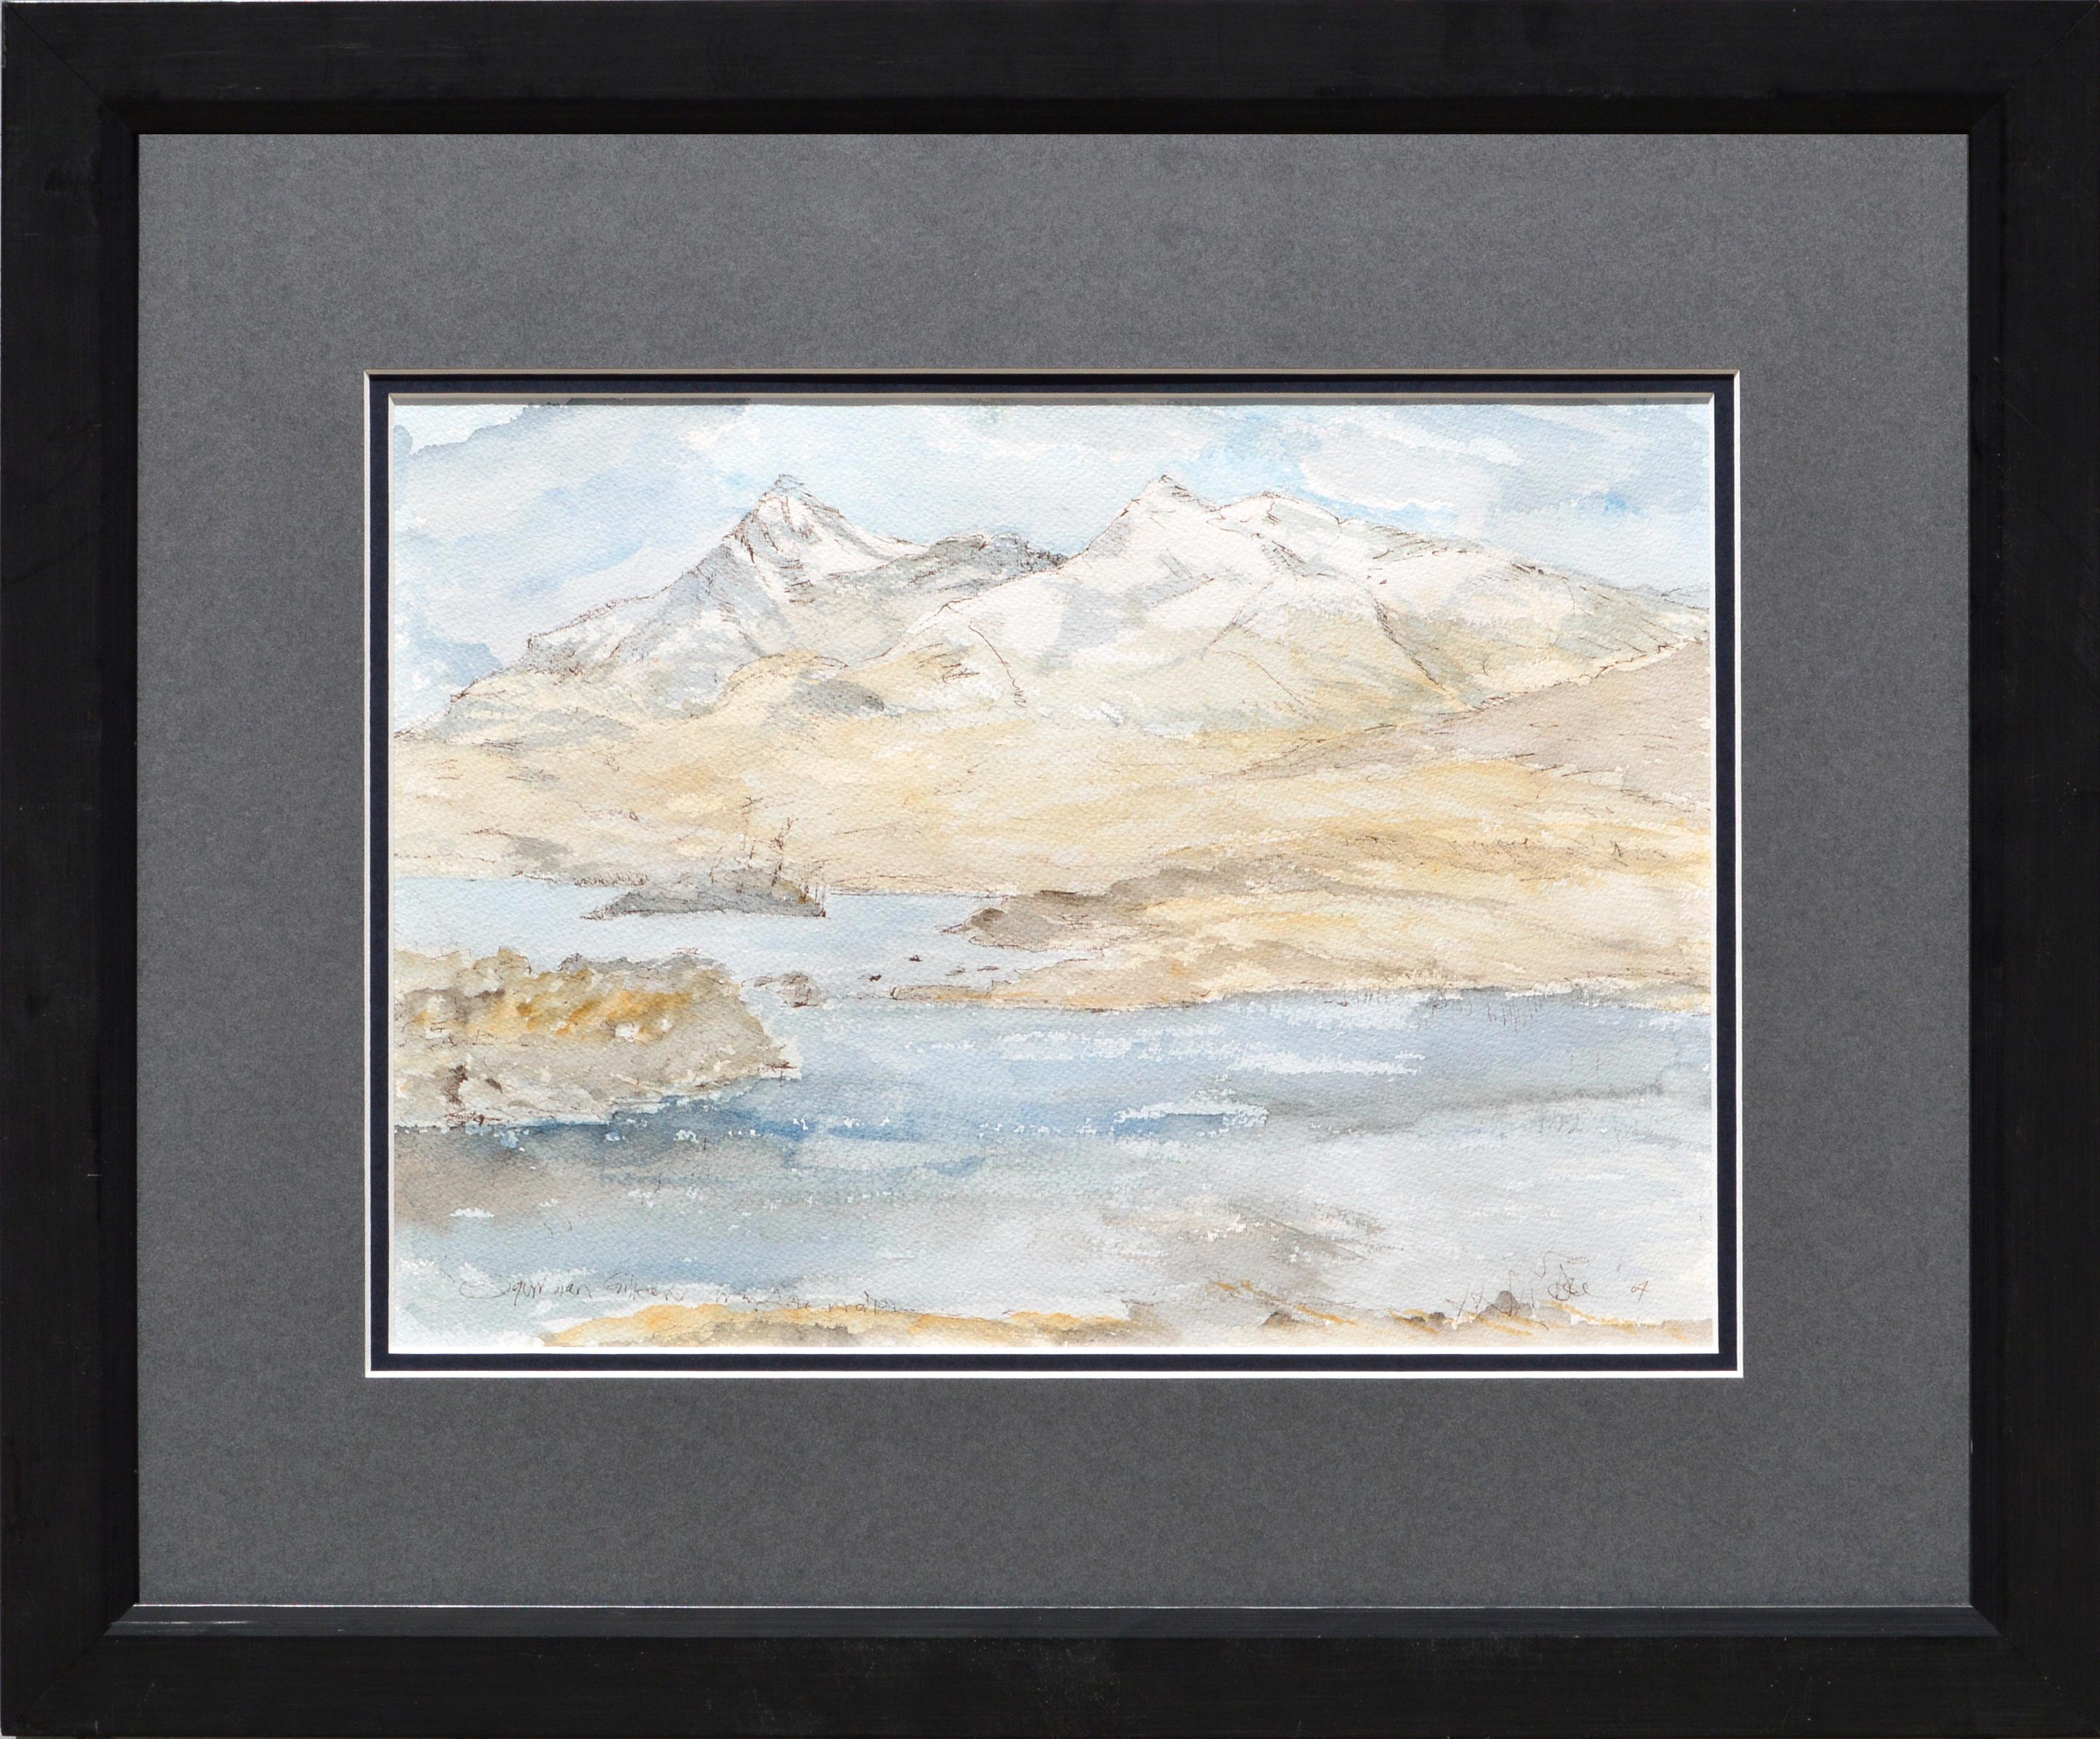 Deirdre Nicholls Landscape Art - "Scurr Nan Gillean and Loch" - Scotland Landscape